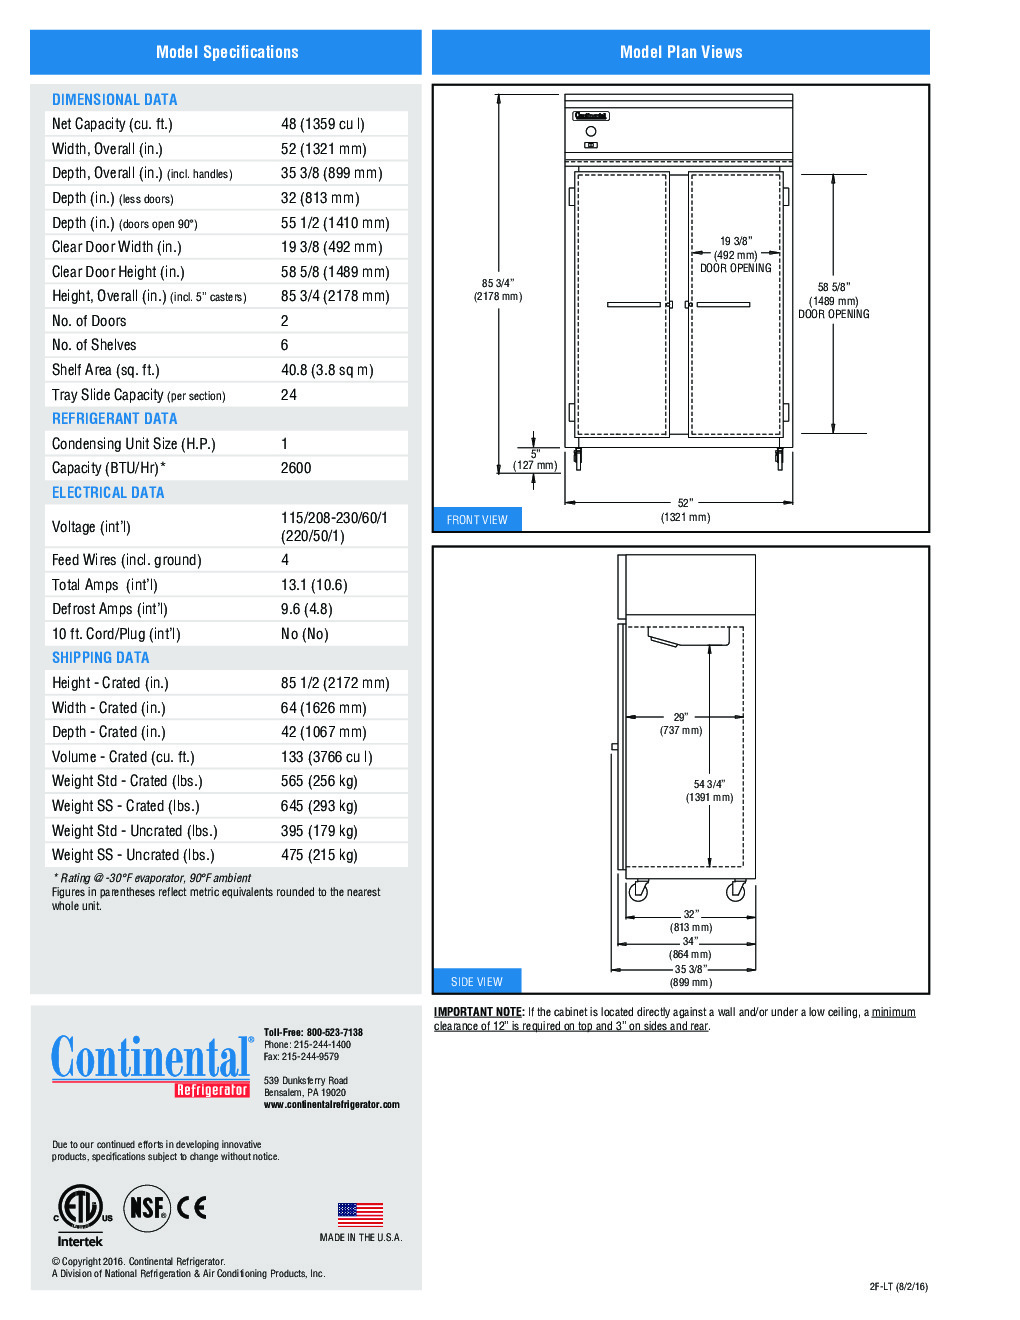 Continental Refrigerator 2F-LT-SA Reach-In Low Temperature Freezer